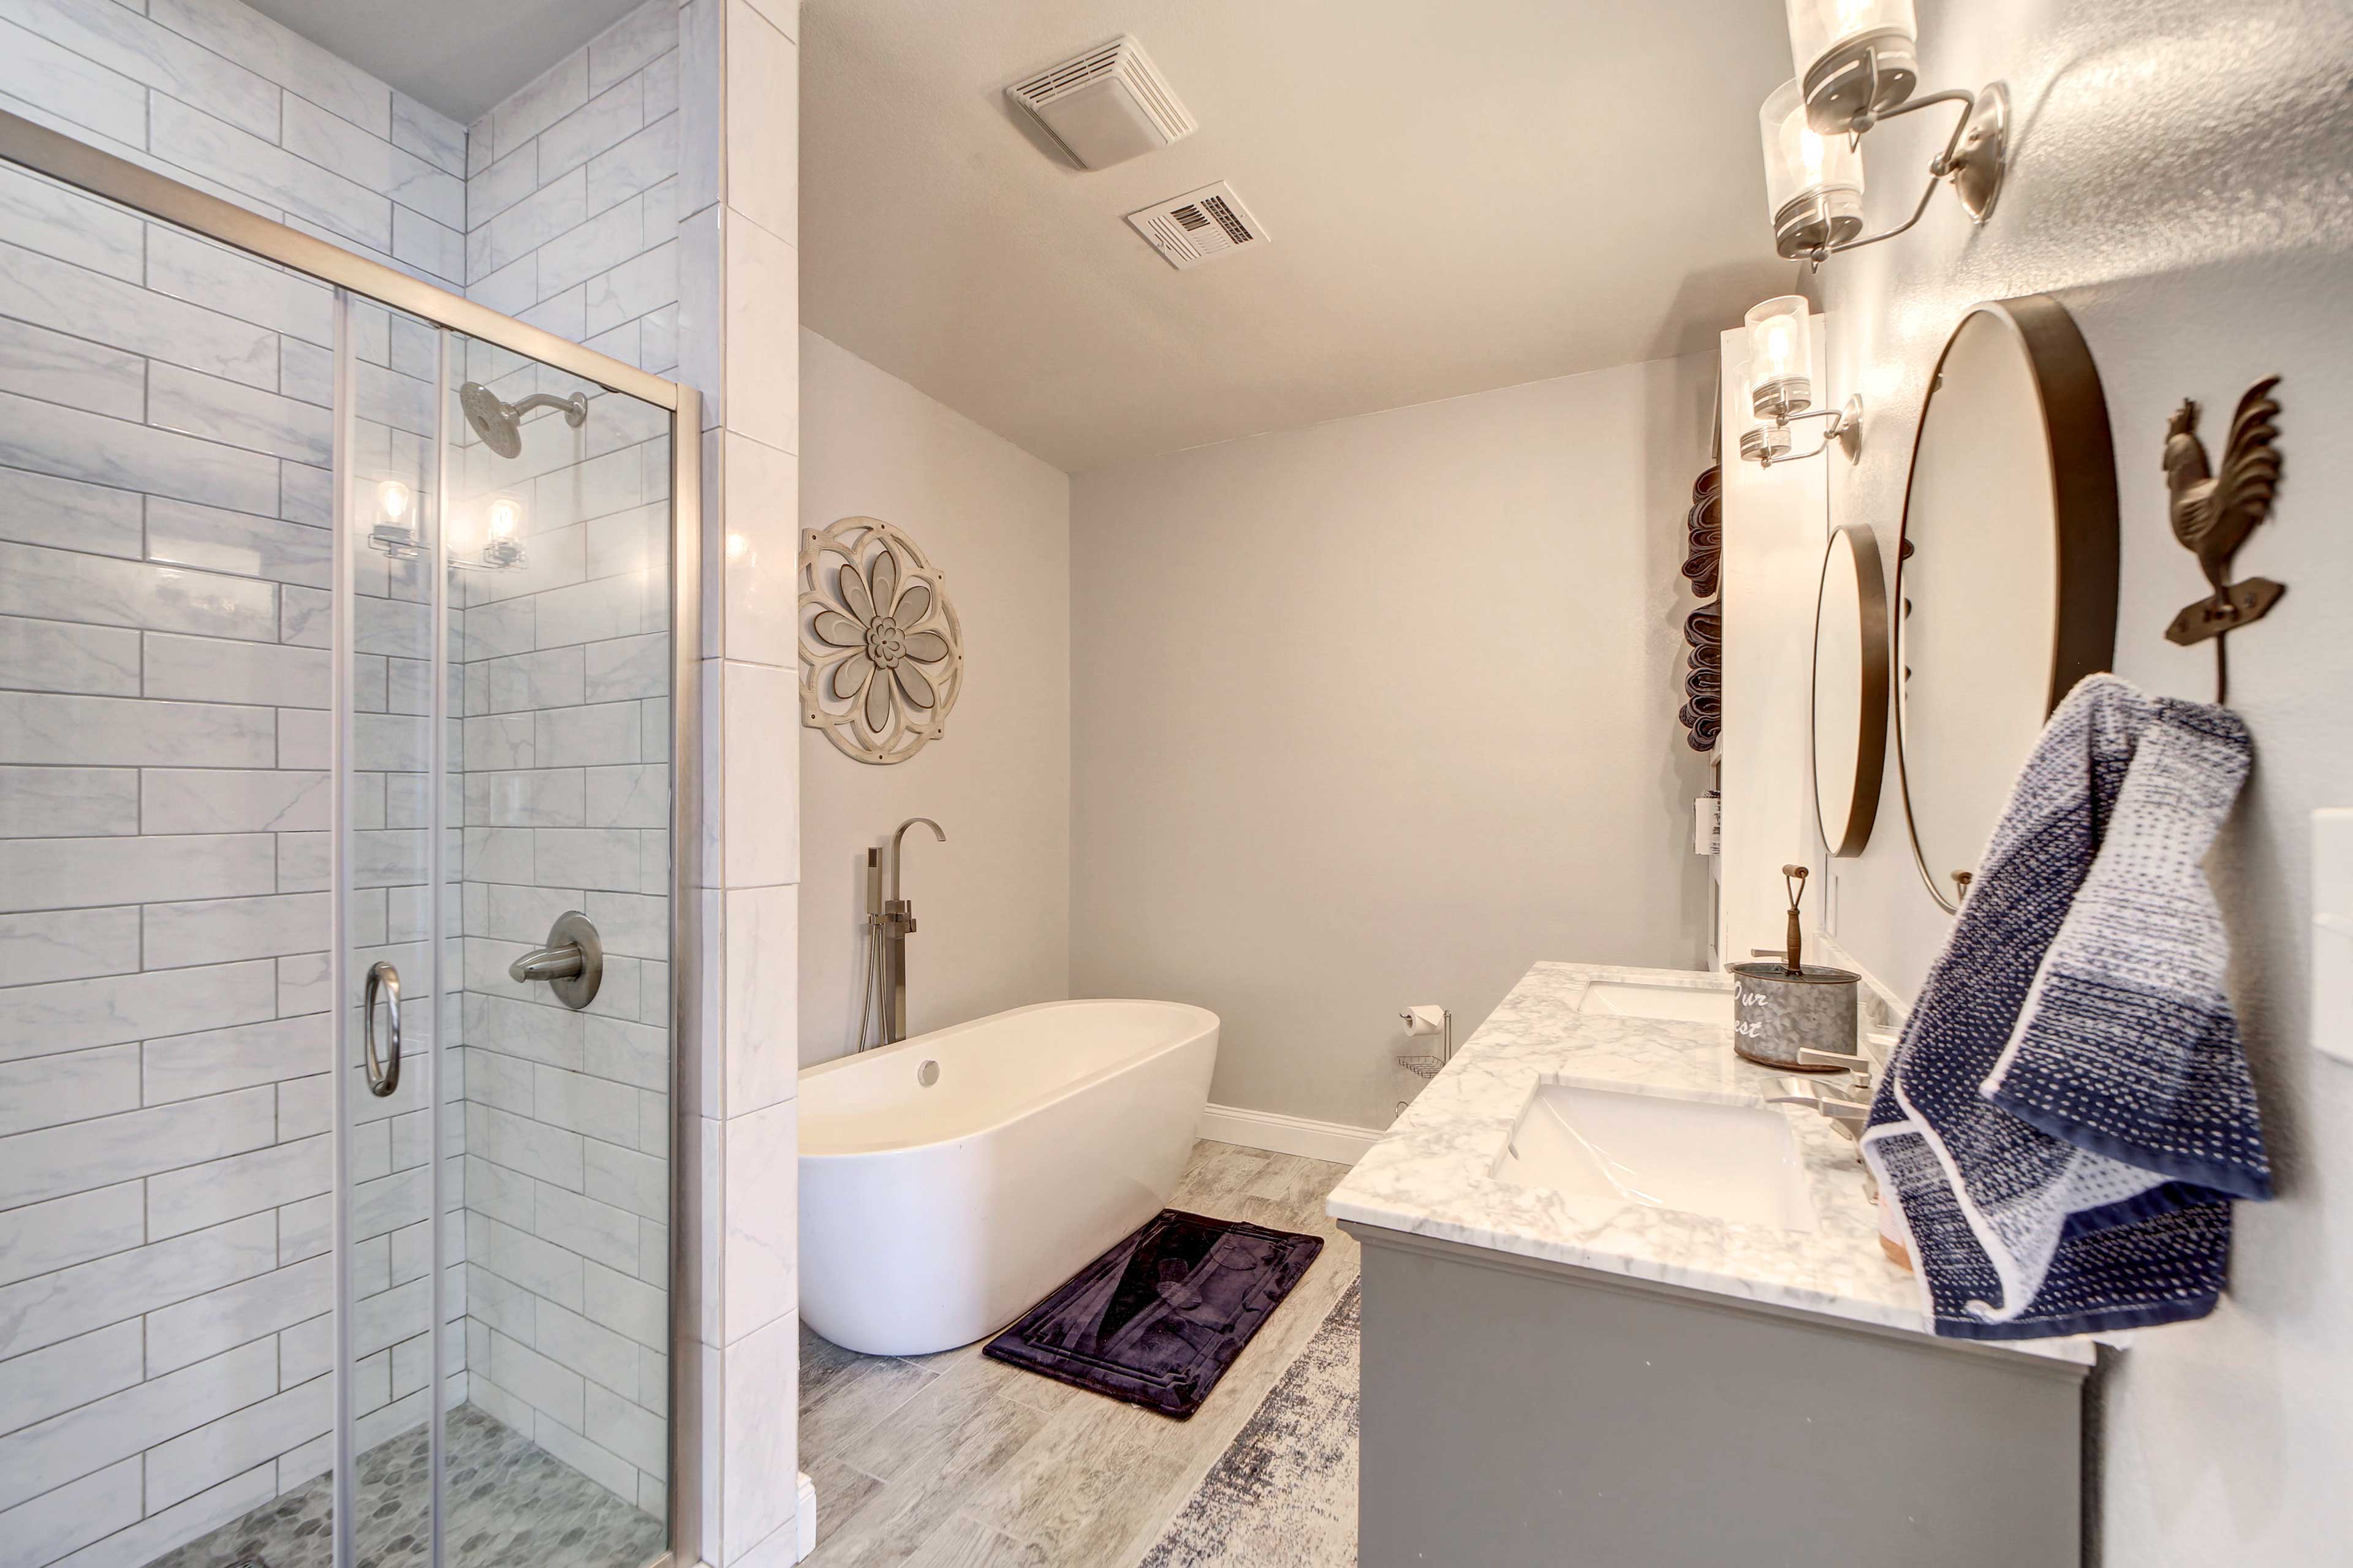 En-Suite Bathroom | Complimentary Toiletries | Towels Provided | Walk-In Shower